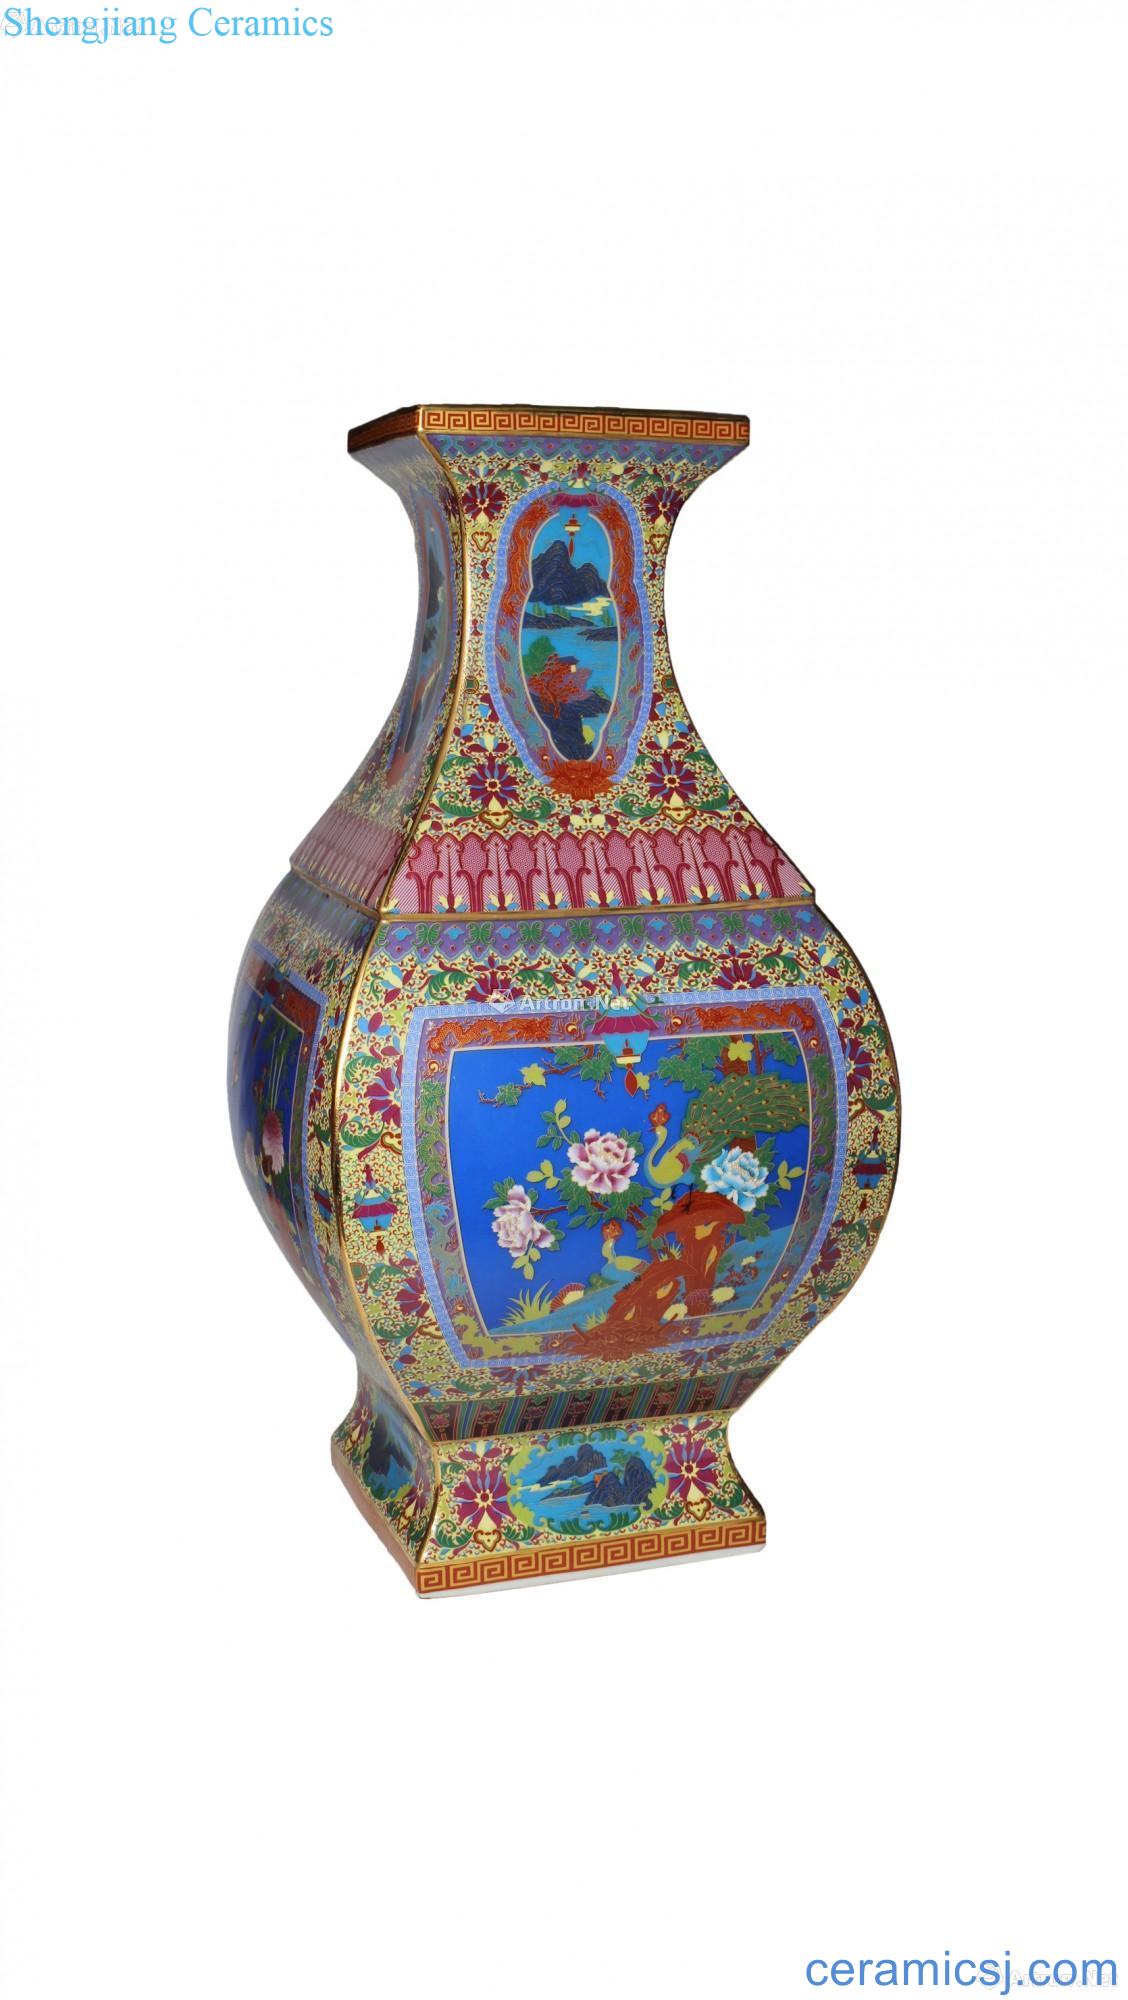 Colored enamel medallion and decorative bottle